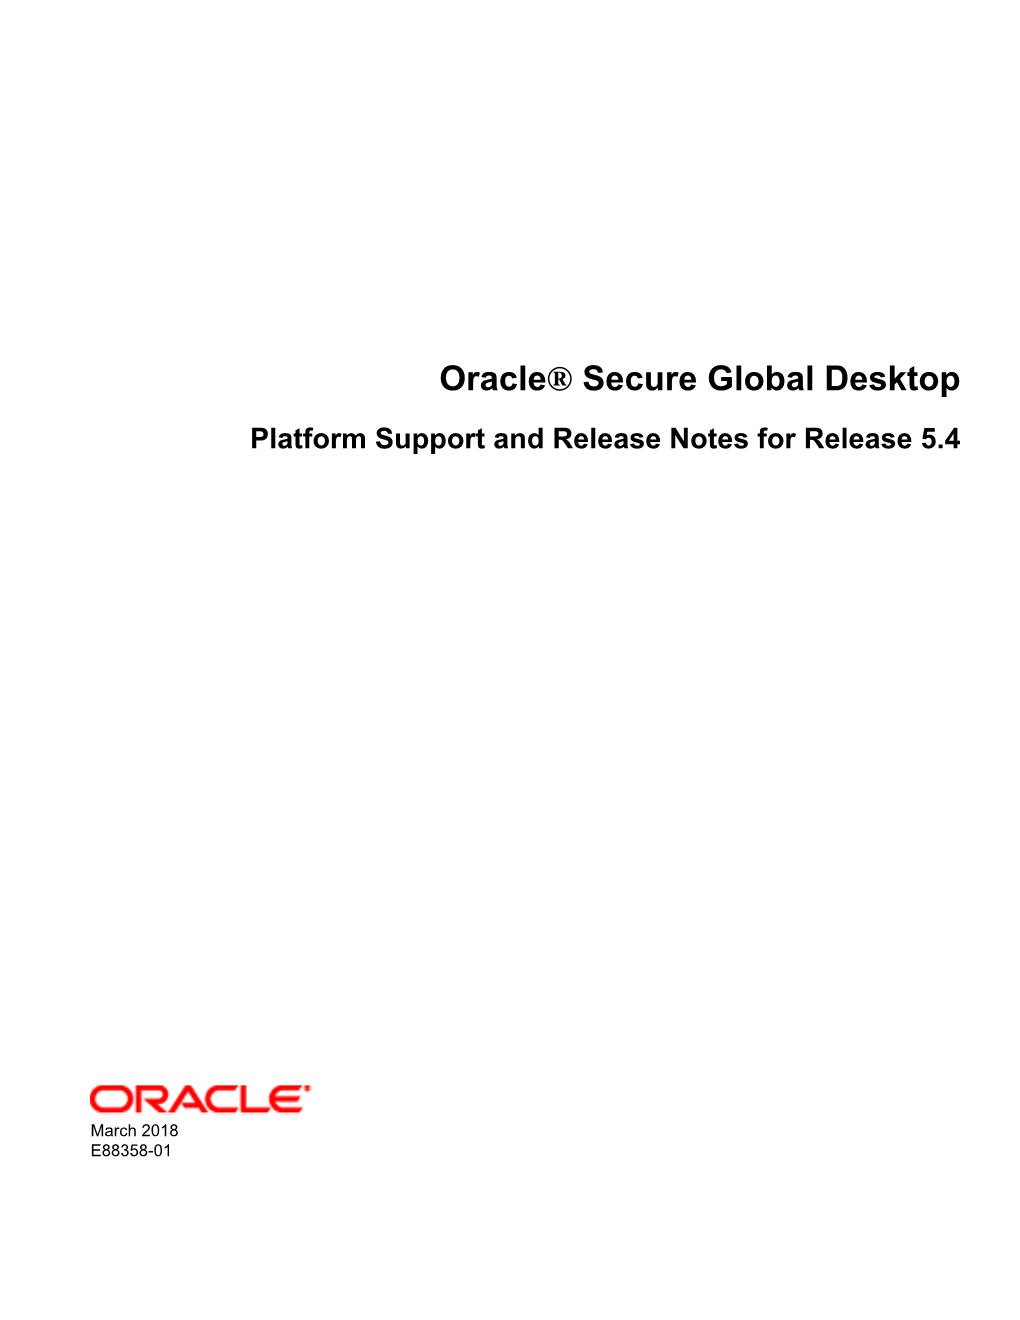 Oracle® Secure Global Desktop Platform Support and Release Notes for Release 5.4